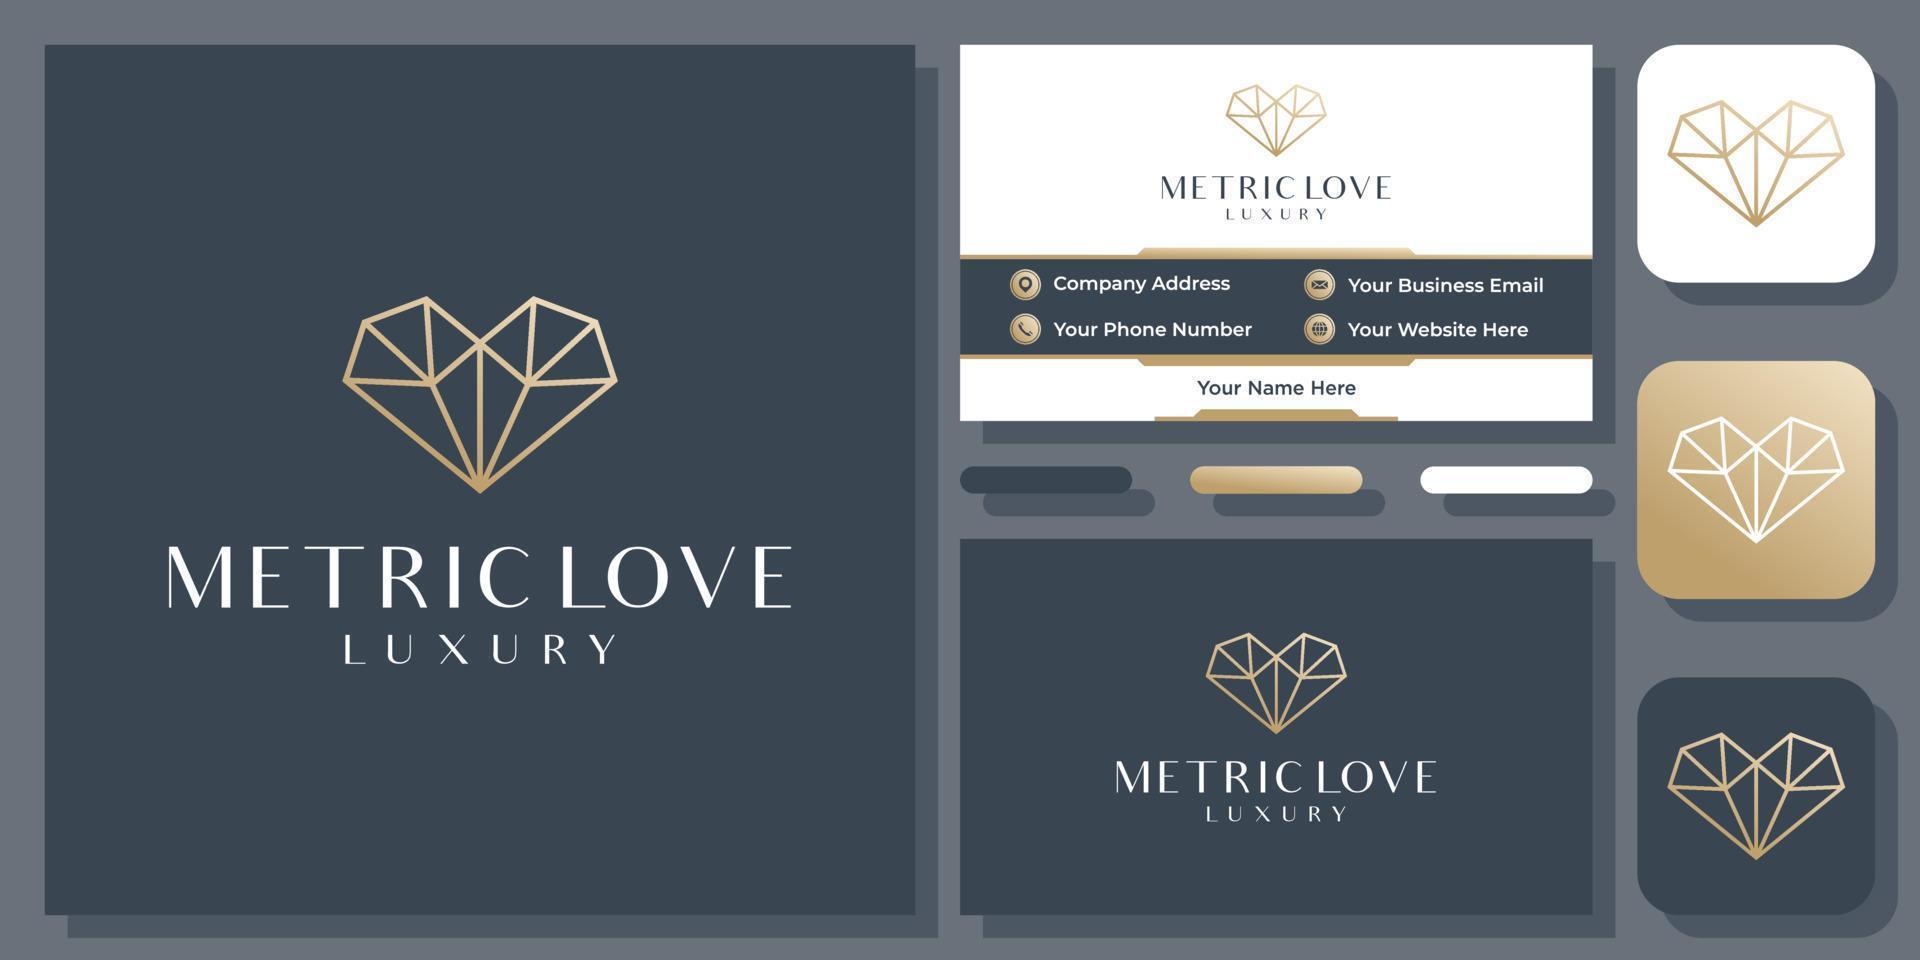 älskar diamant guld smycken gyllene lyx elegant geometrisk vektor logotyp design med visitkort